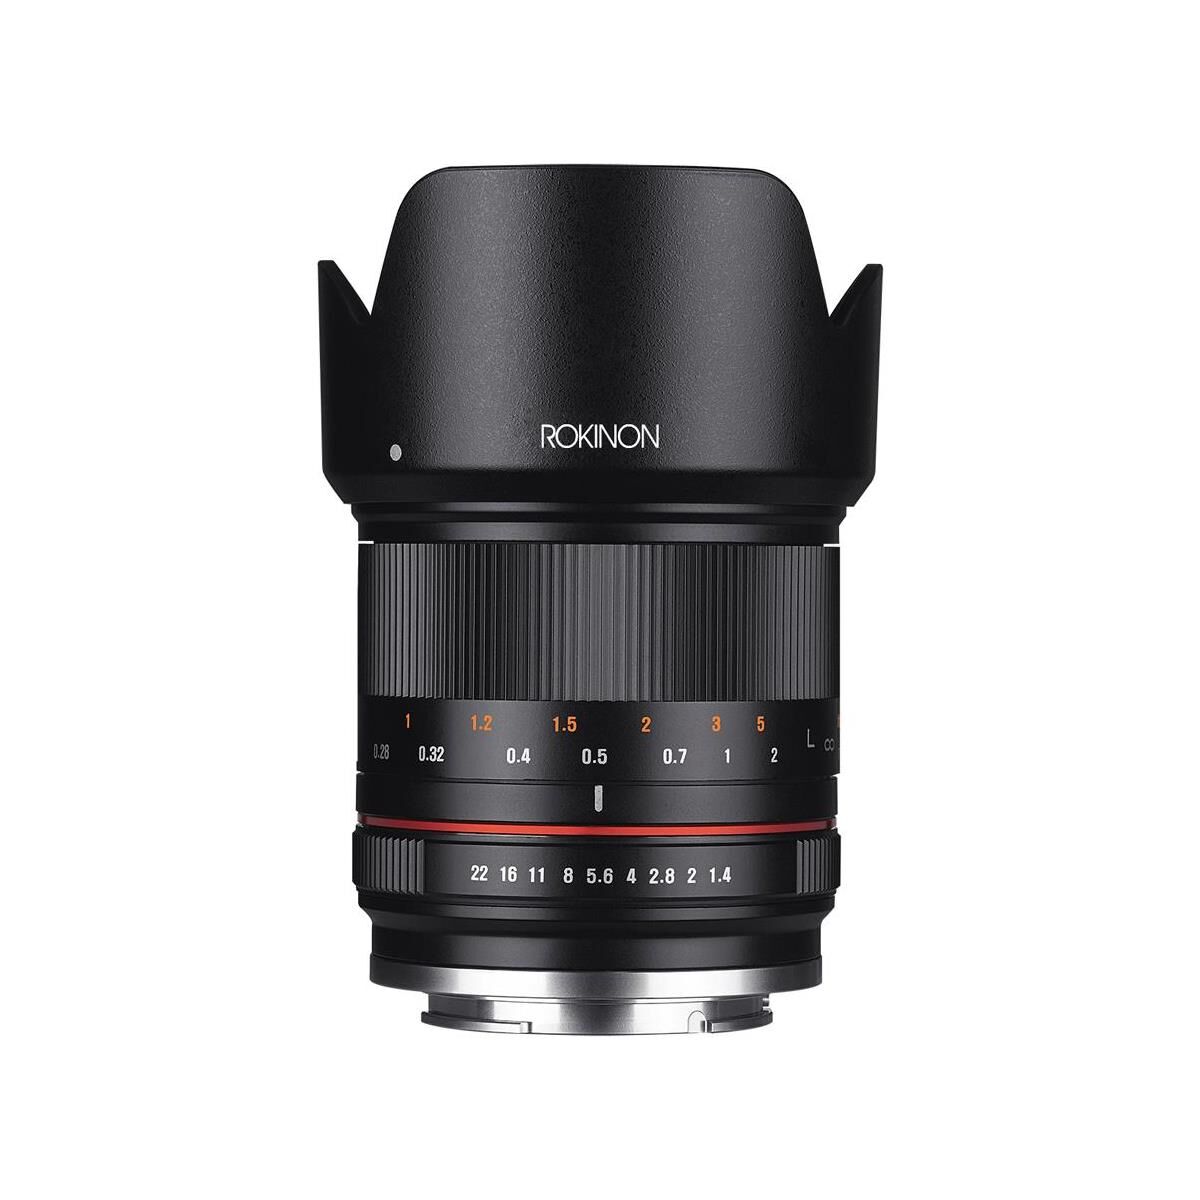 Rokinon 21mm f/1.4 Manual Focus Lens f/Fujifilm X Mount Cameras - Black